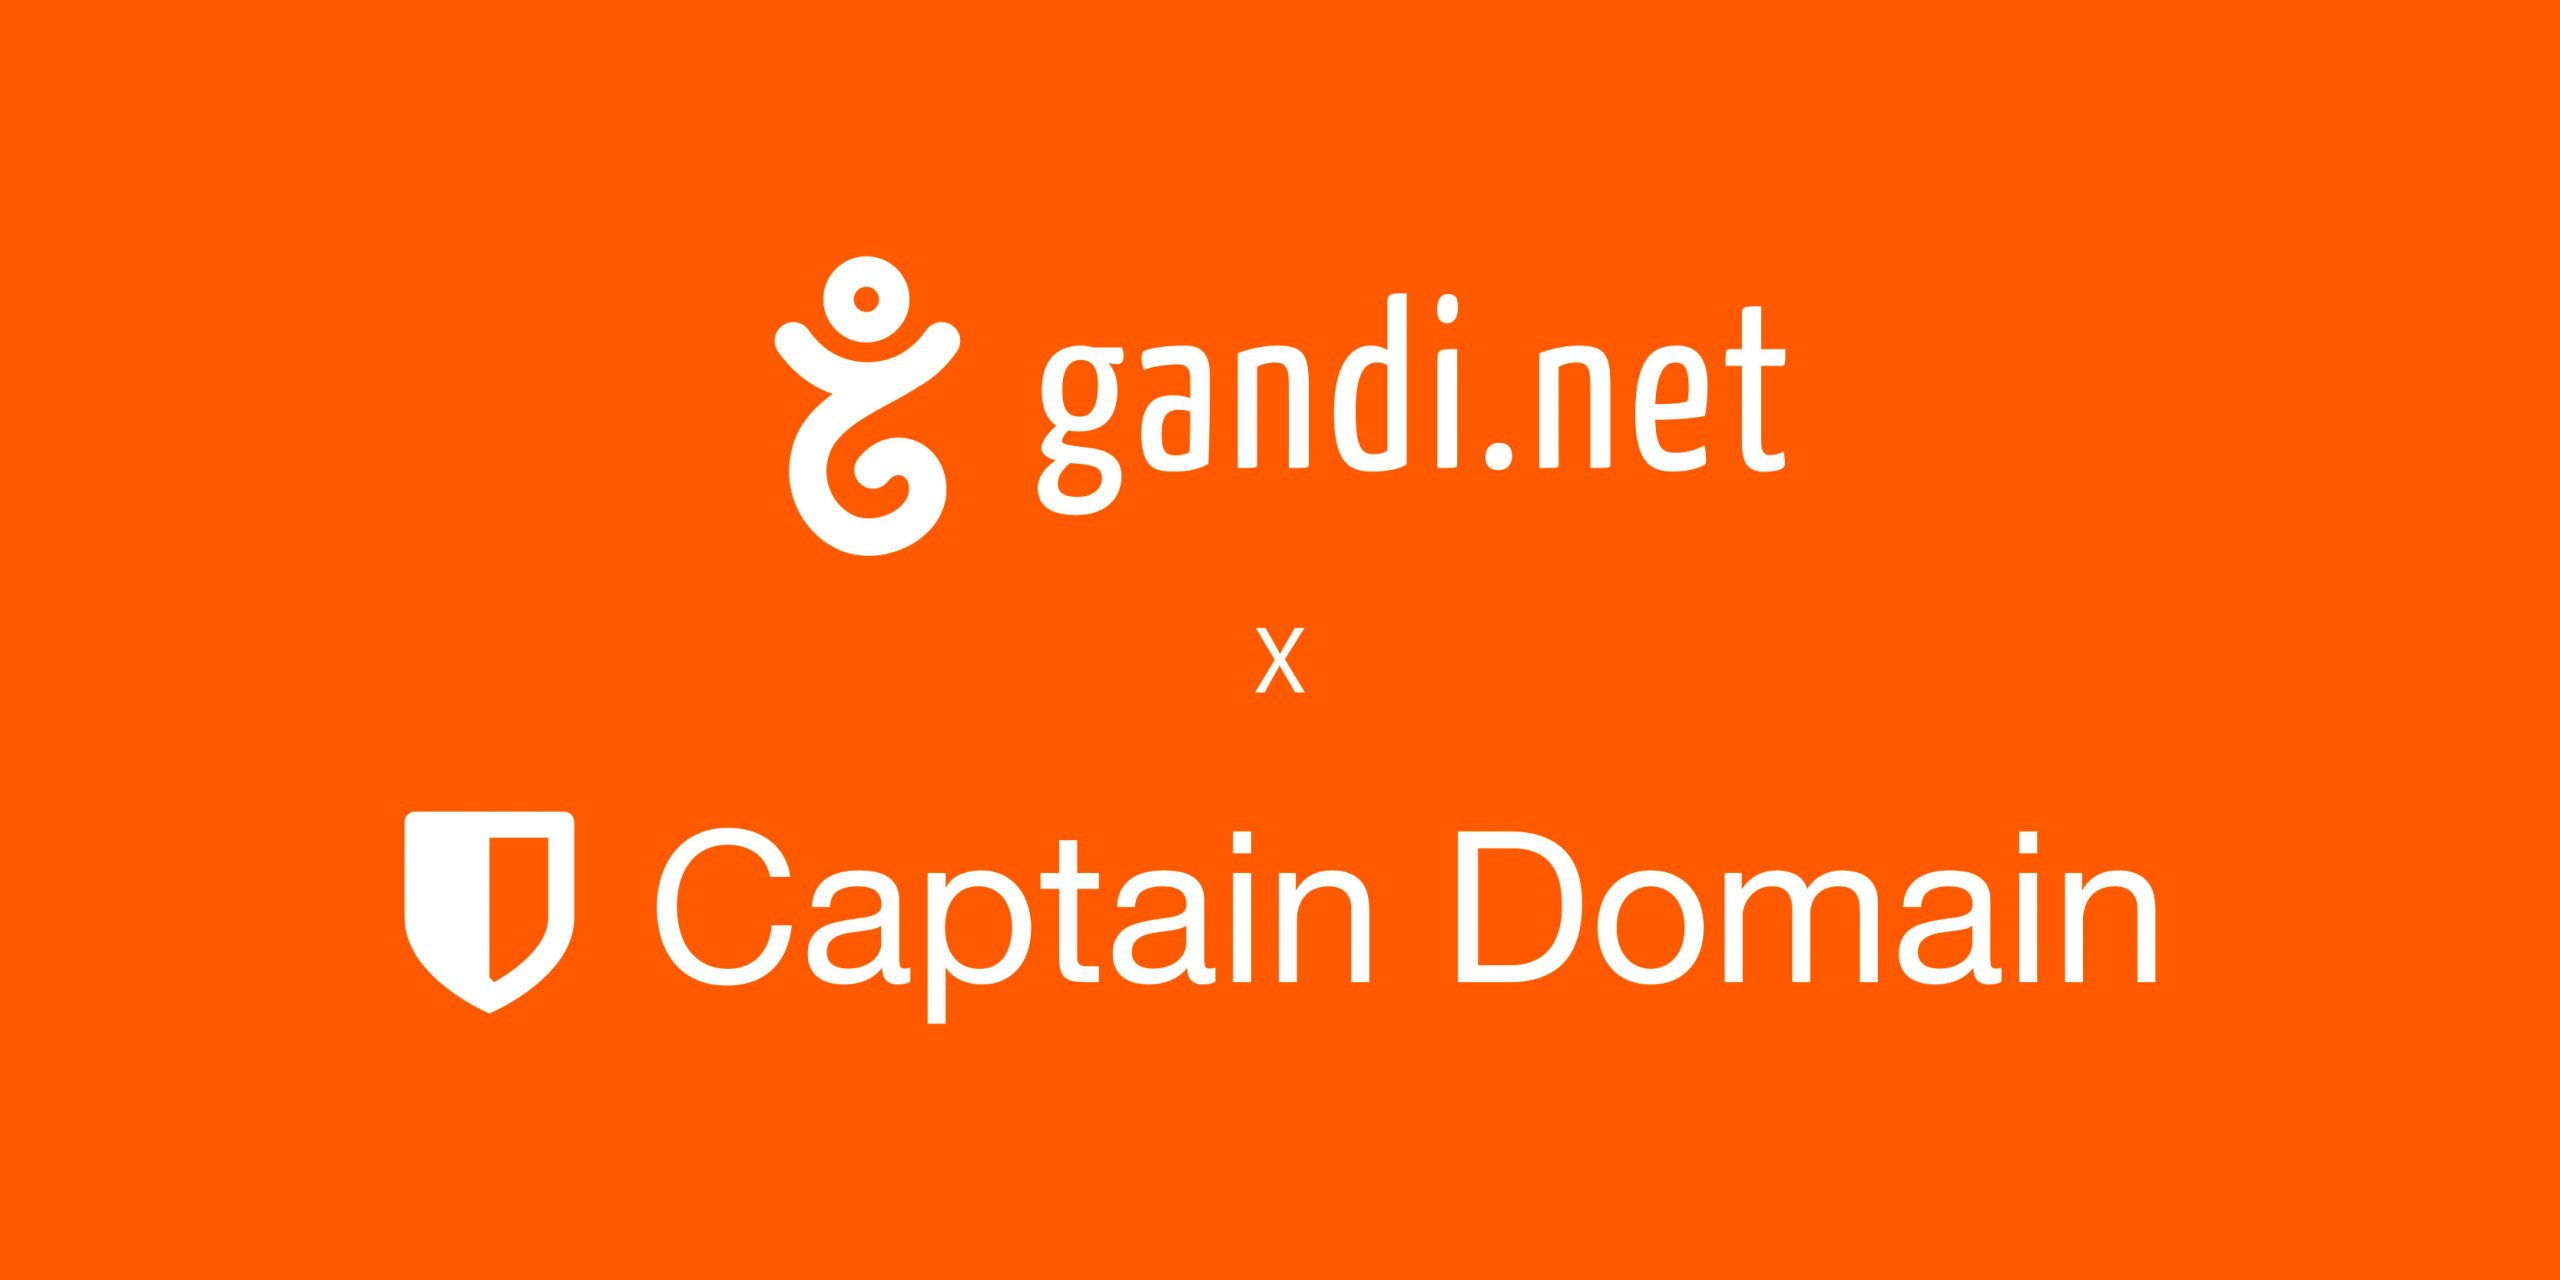 Gandi 提供 Captain Domain 监控服务